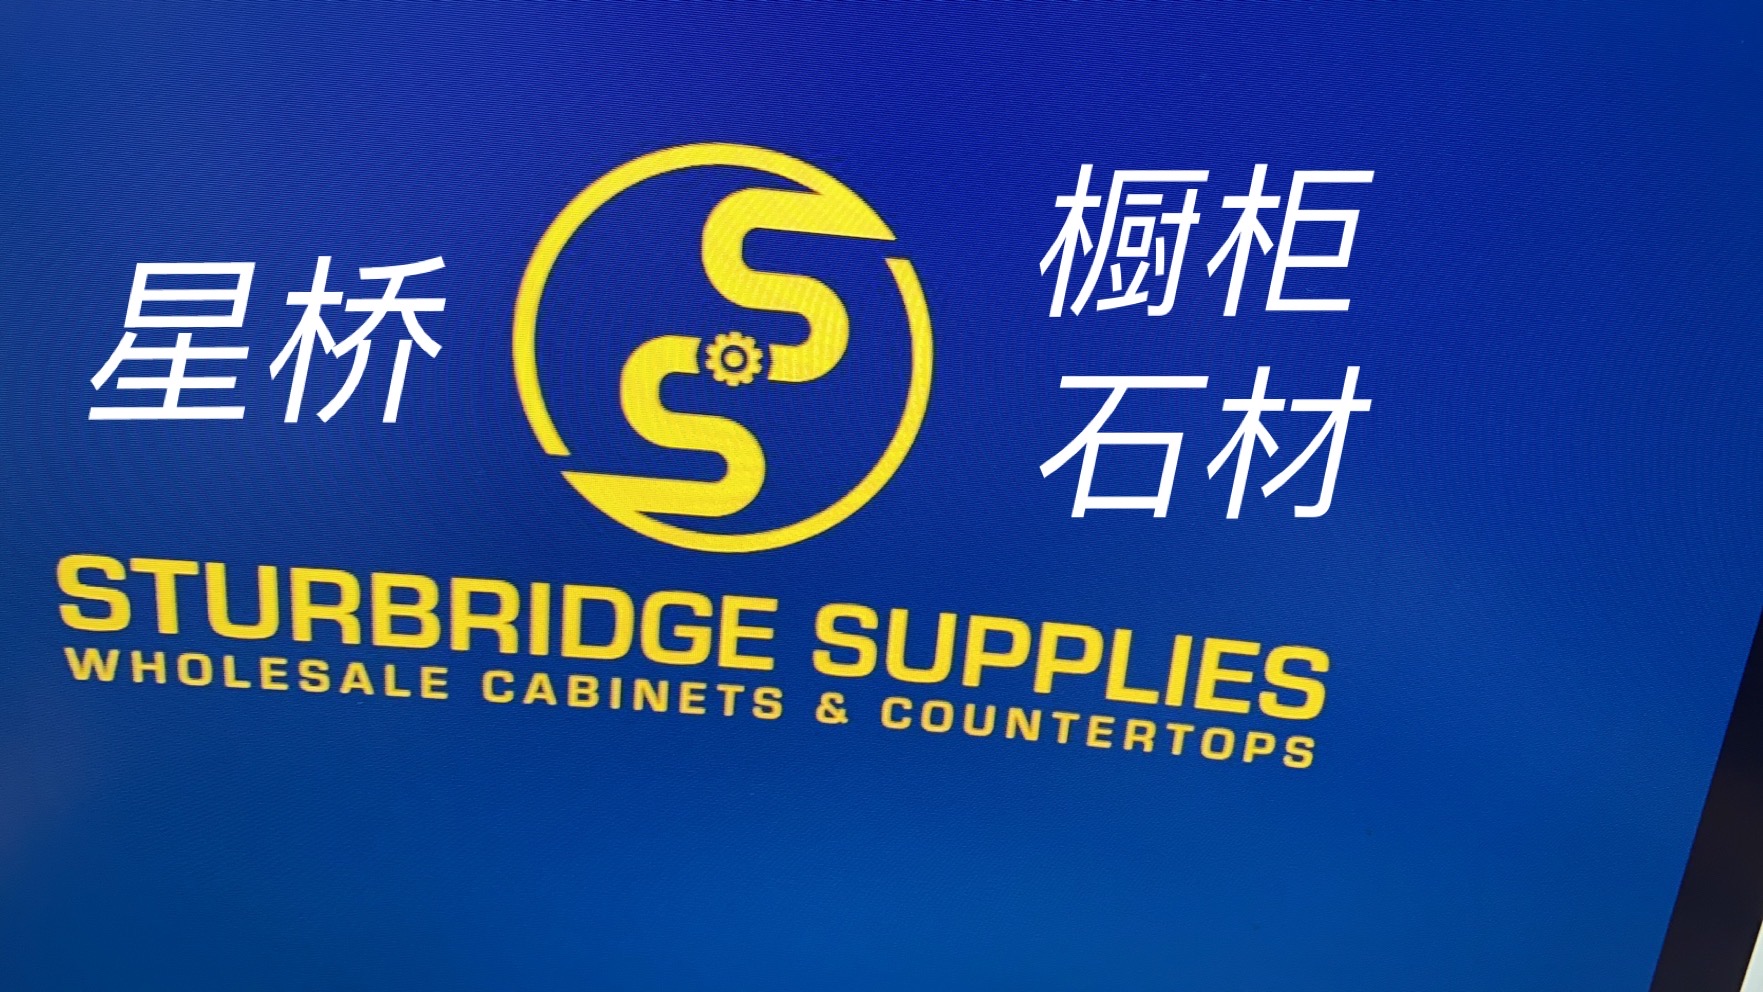 Sturbridge Supplies Wholesale cabinets & Countertops